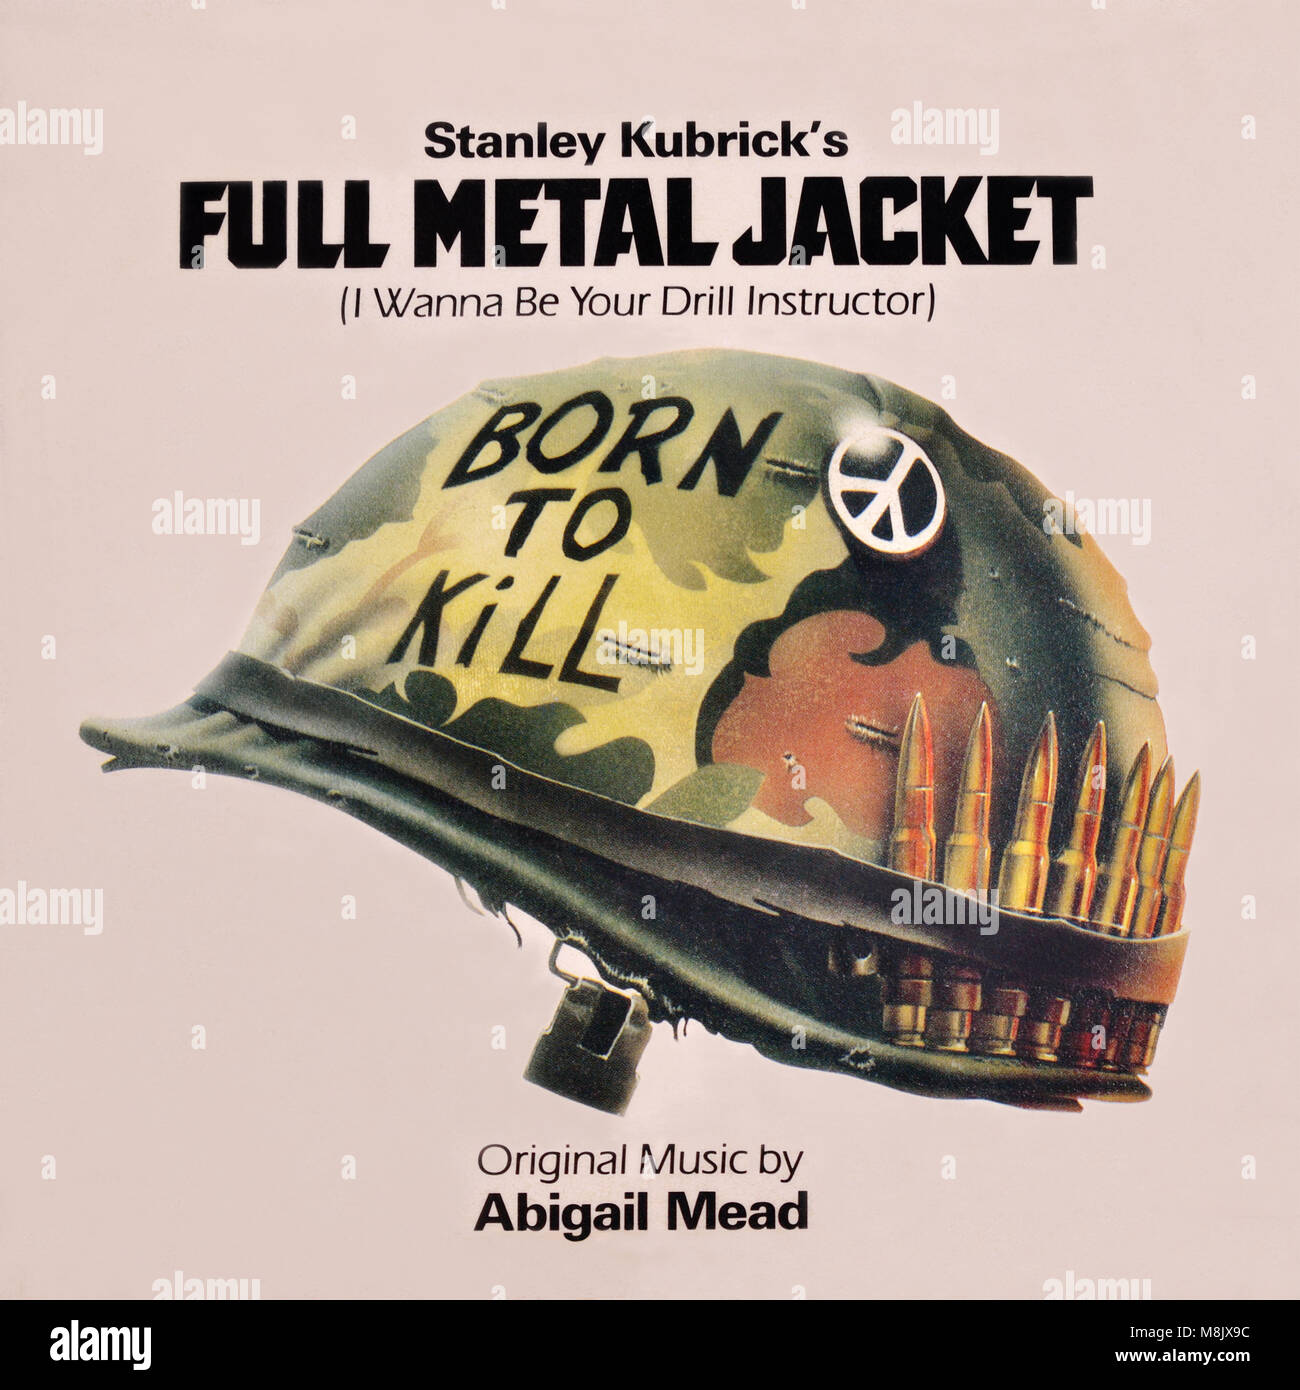 Abigail Mead & Nigel Goulding - original Vinyl Album Cover - Full Metal Jacket (I Wanna Be Your Drill Instructor) - 1987 Stockfoto